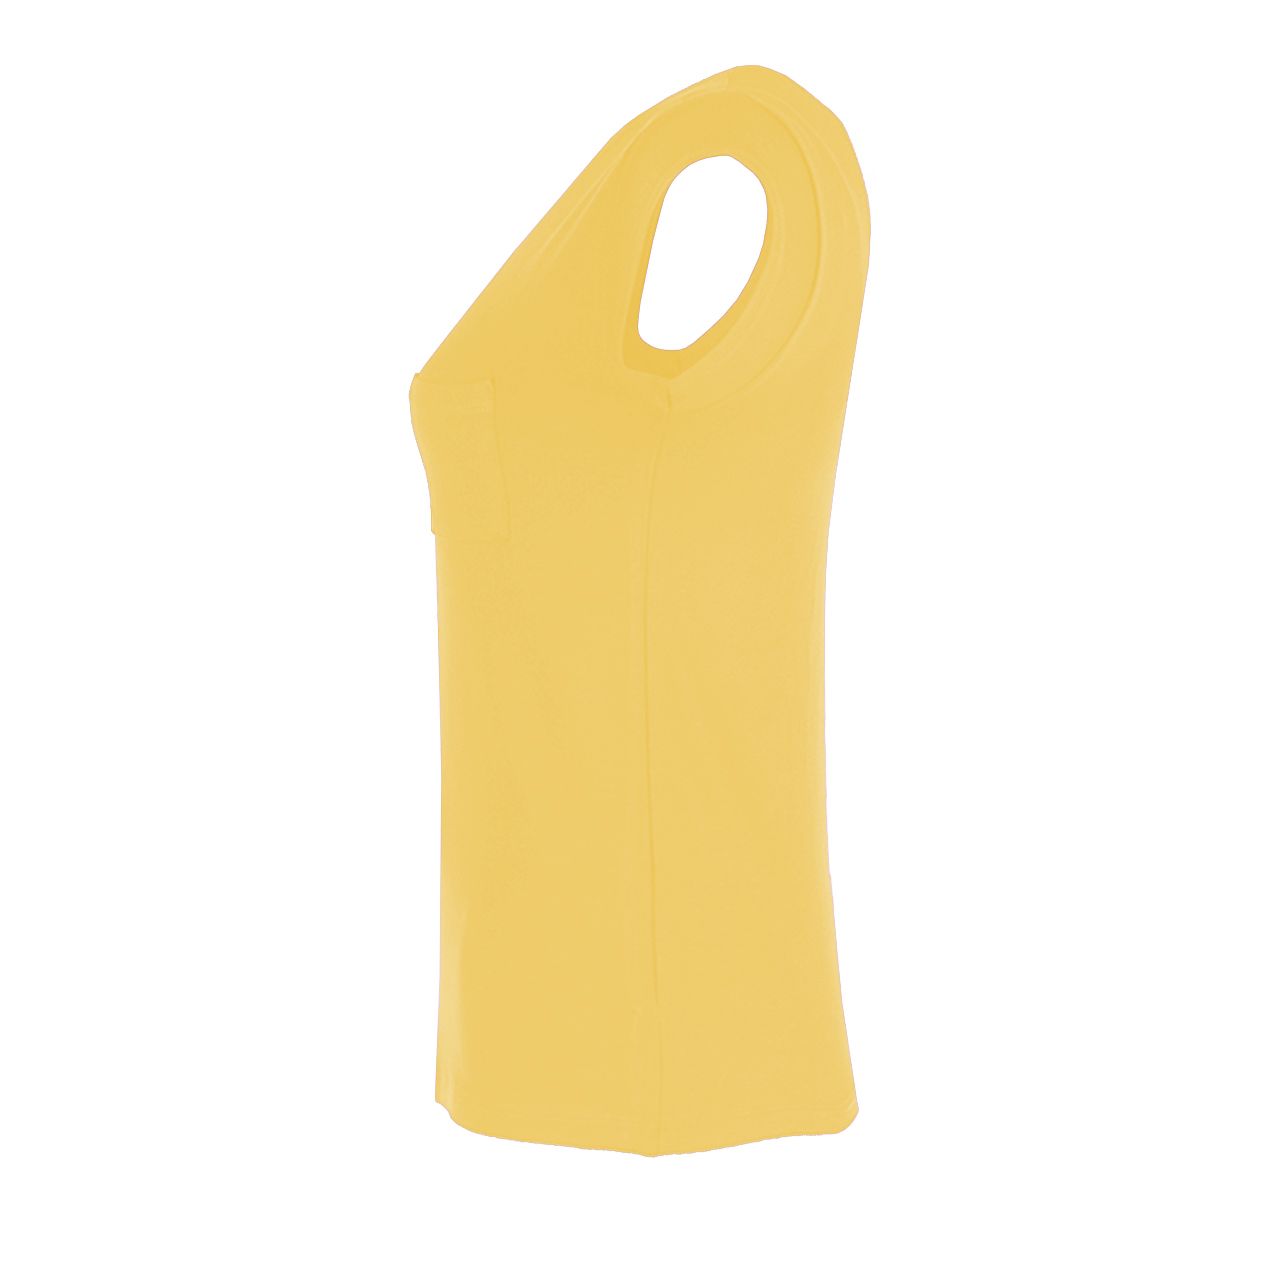  تی شرت زنانه افراتین کد 2515 رنگ زرد -  - 3